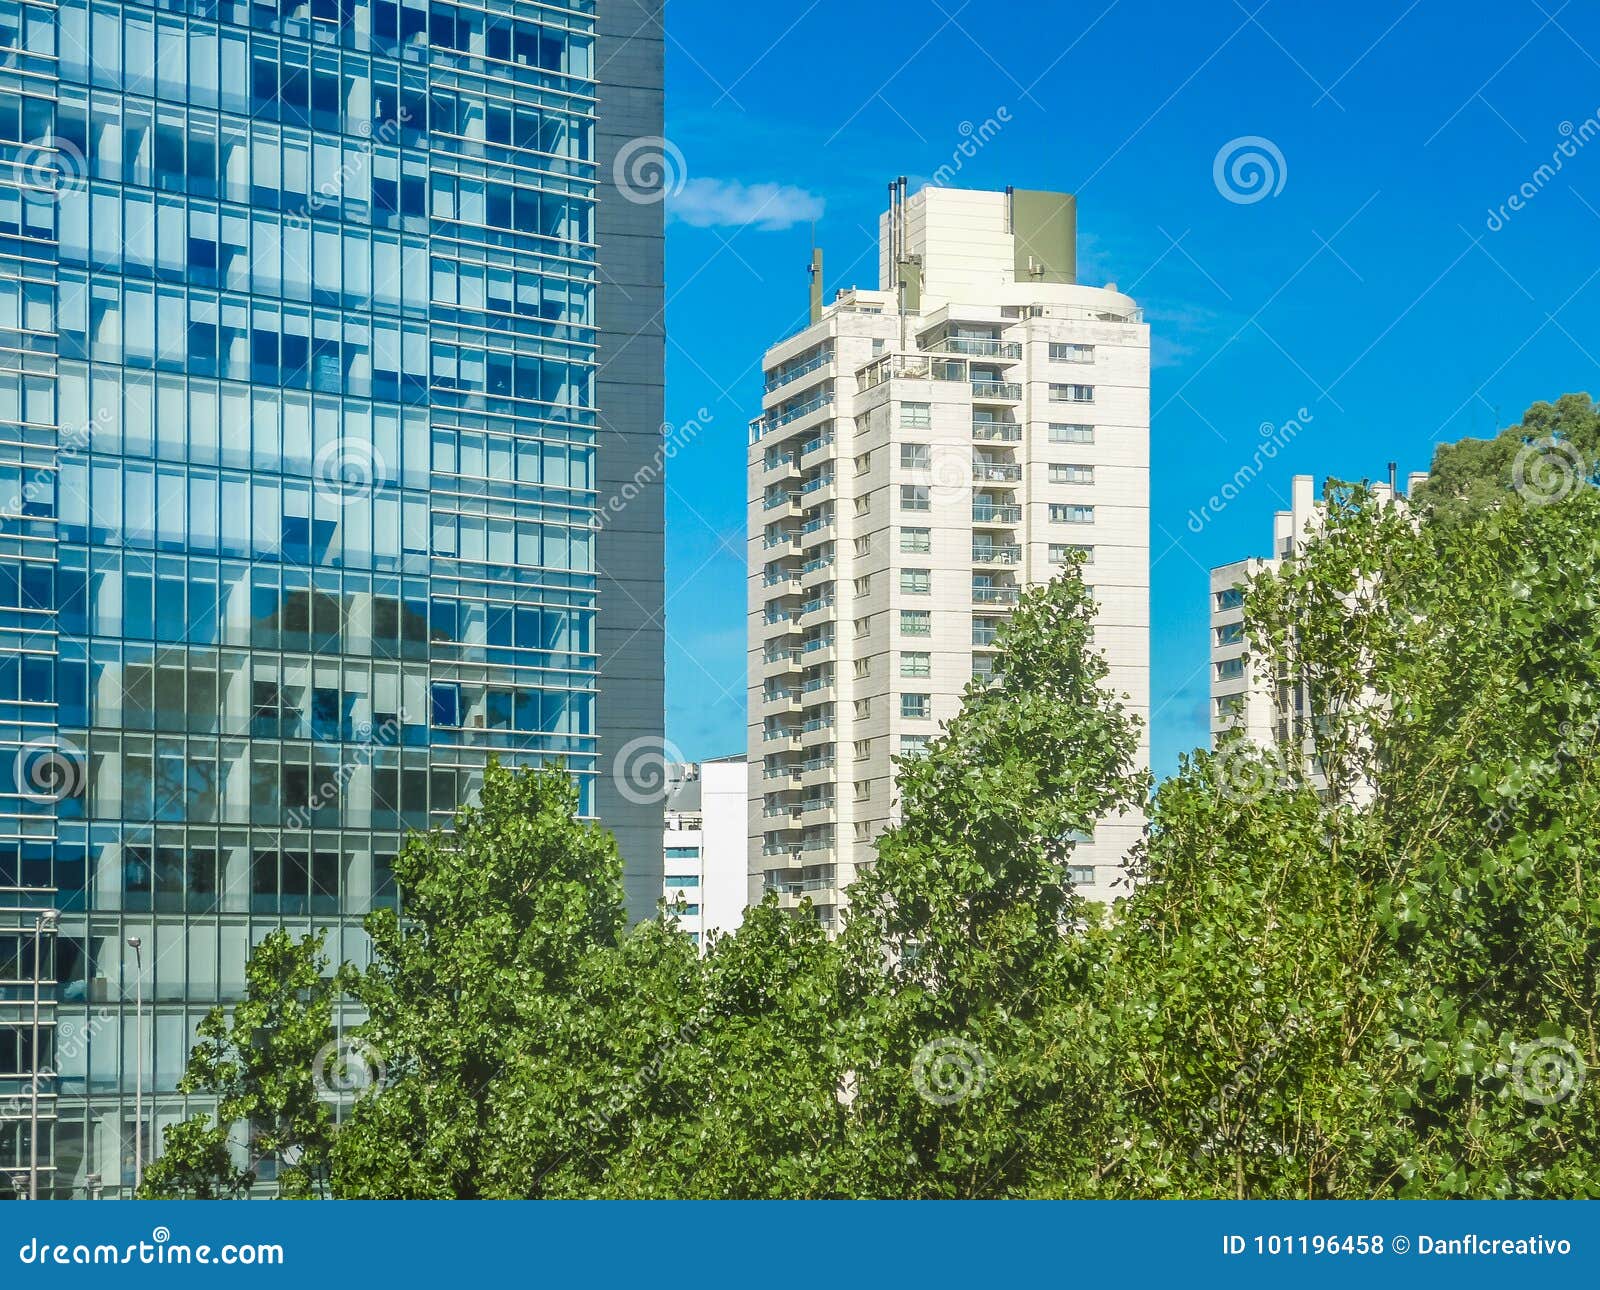 modern apartment buildings exterior view